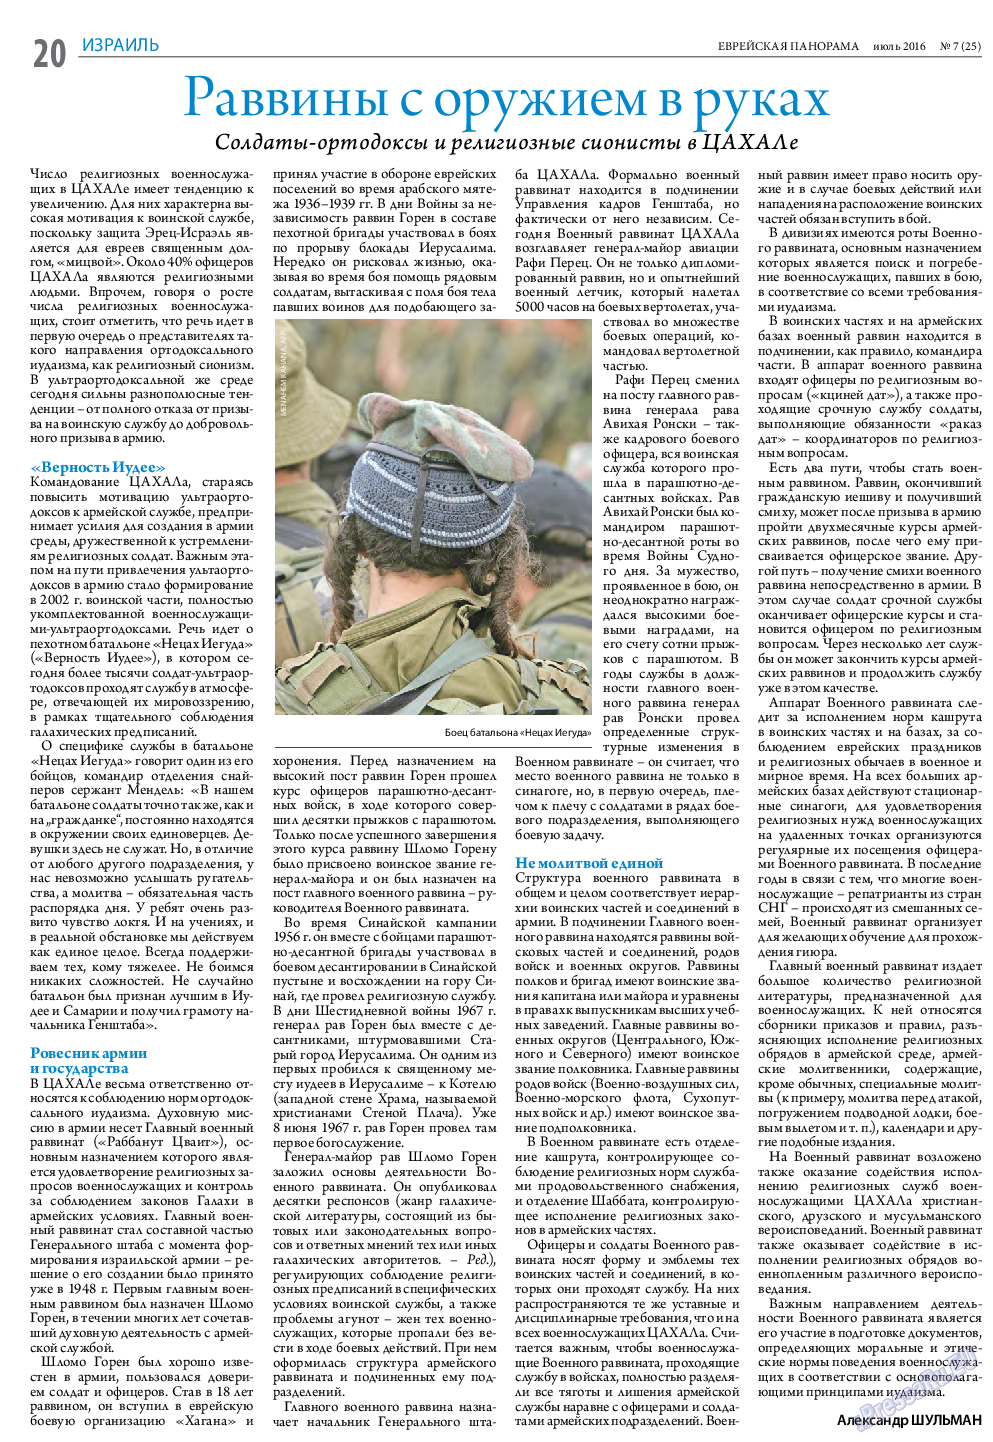 Еврейская панорама, газета. 2016 №7 стр.20